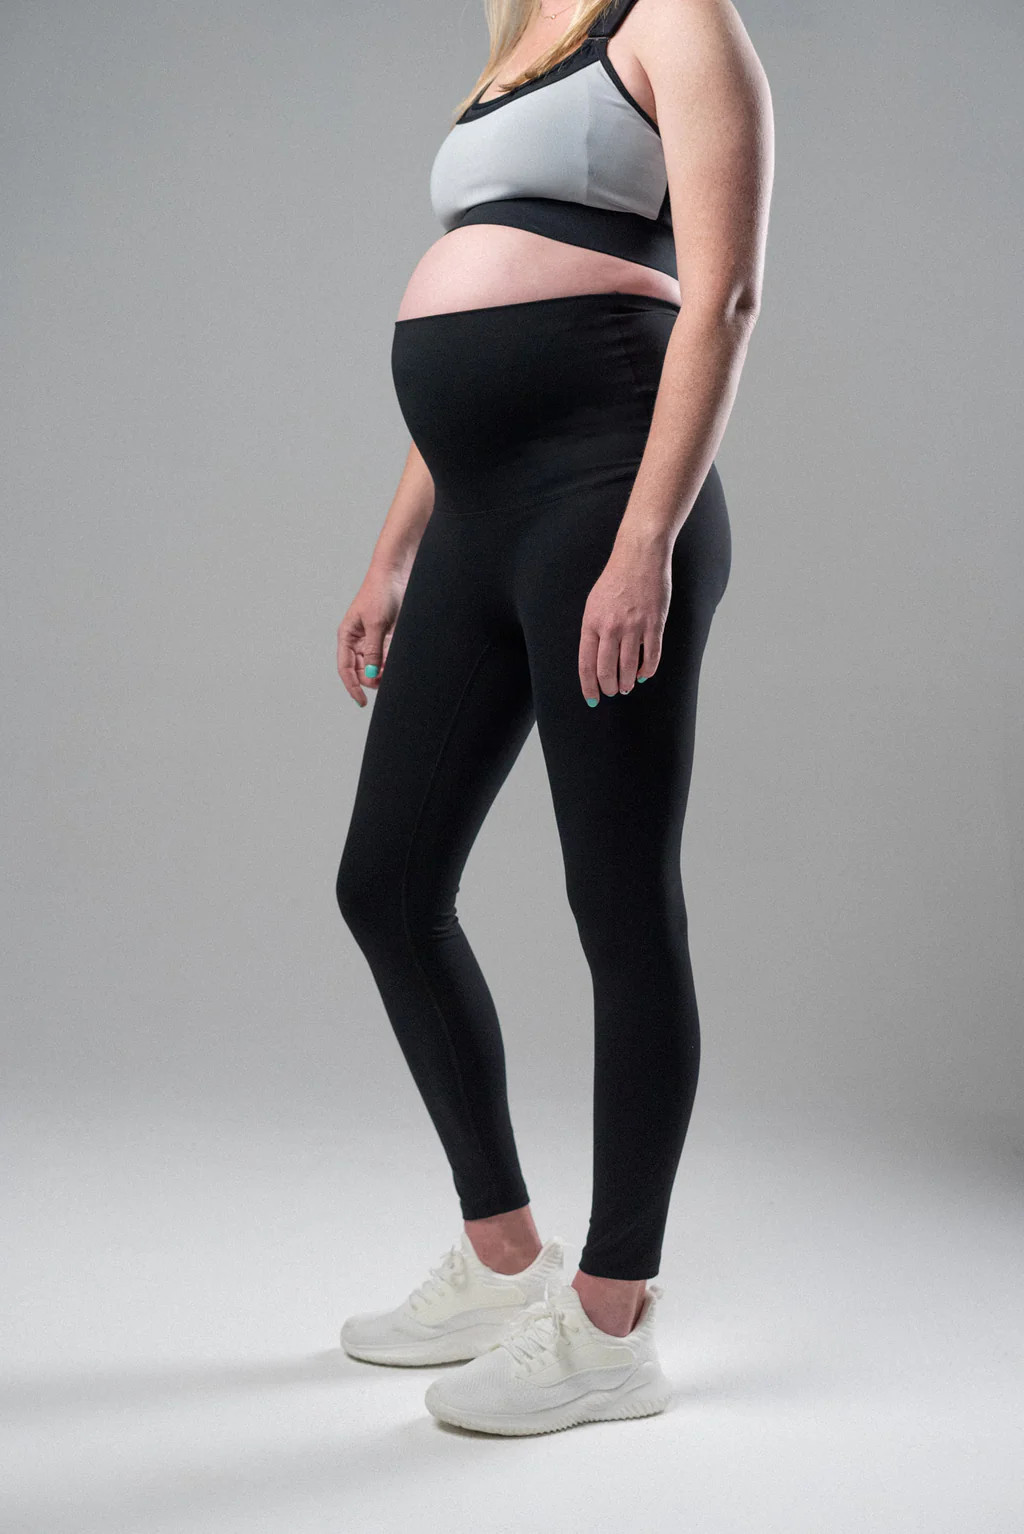 safe haven maternity leggings 28" | Alyth Active